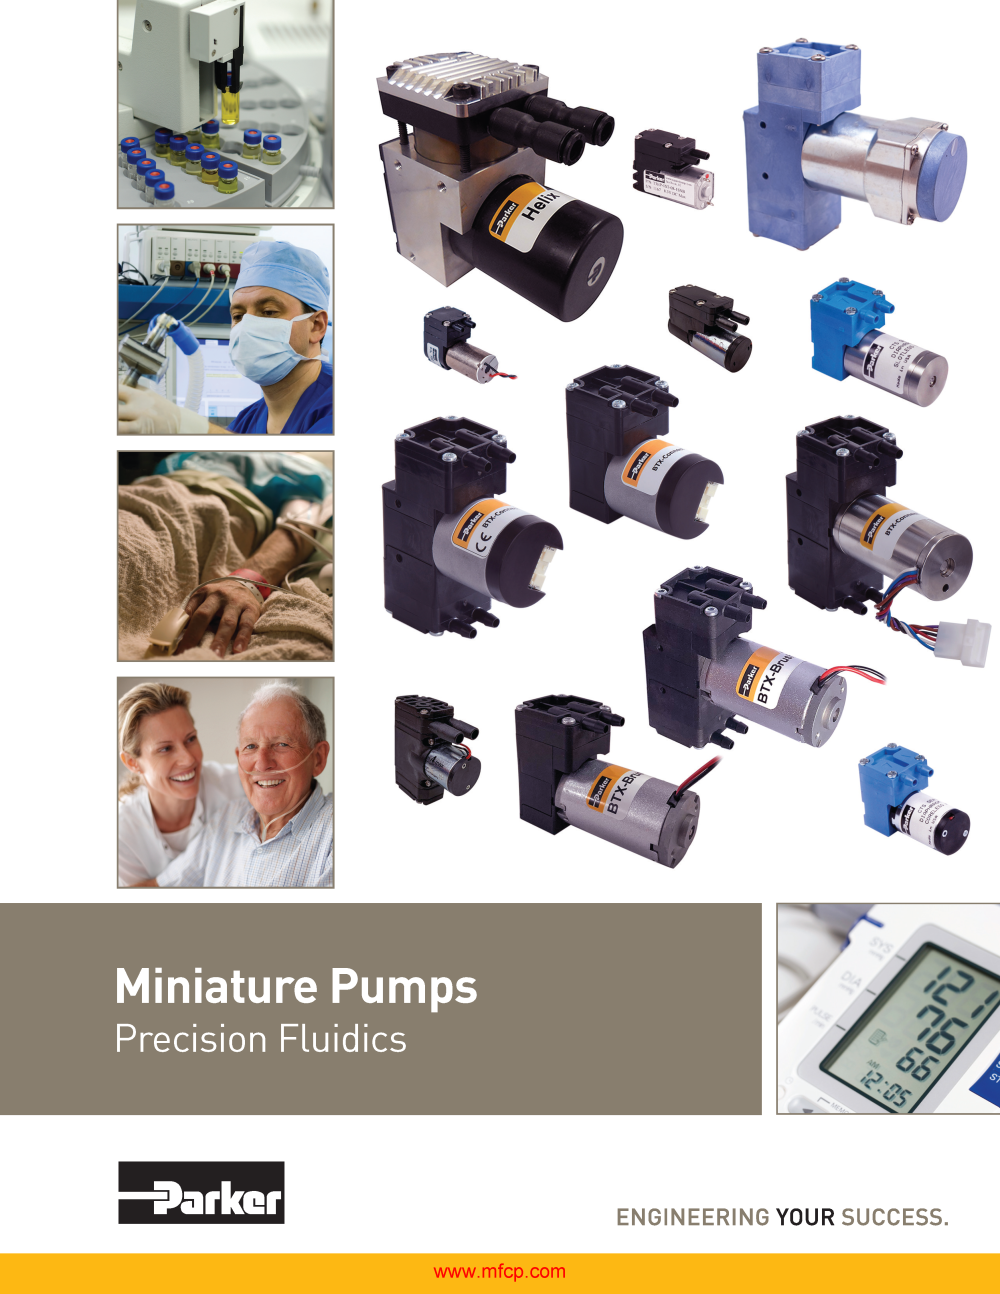 Parker Precision Fluidics Pumps Catalog